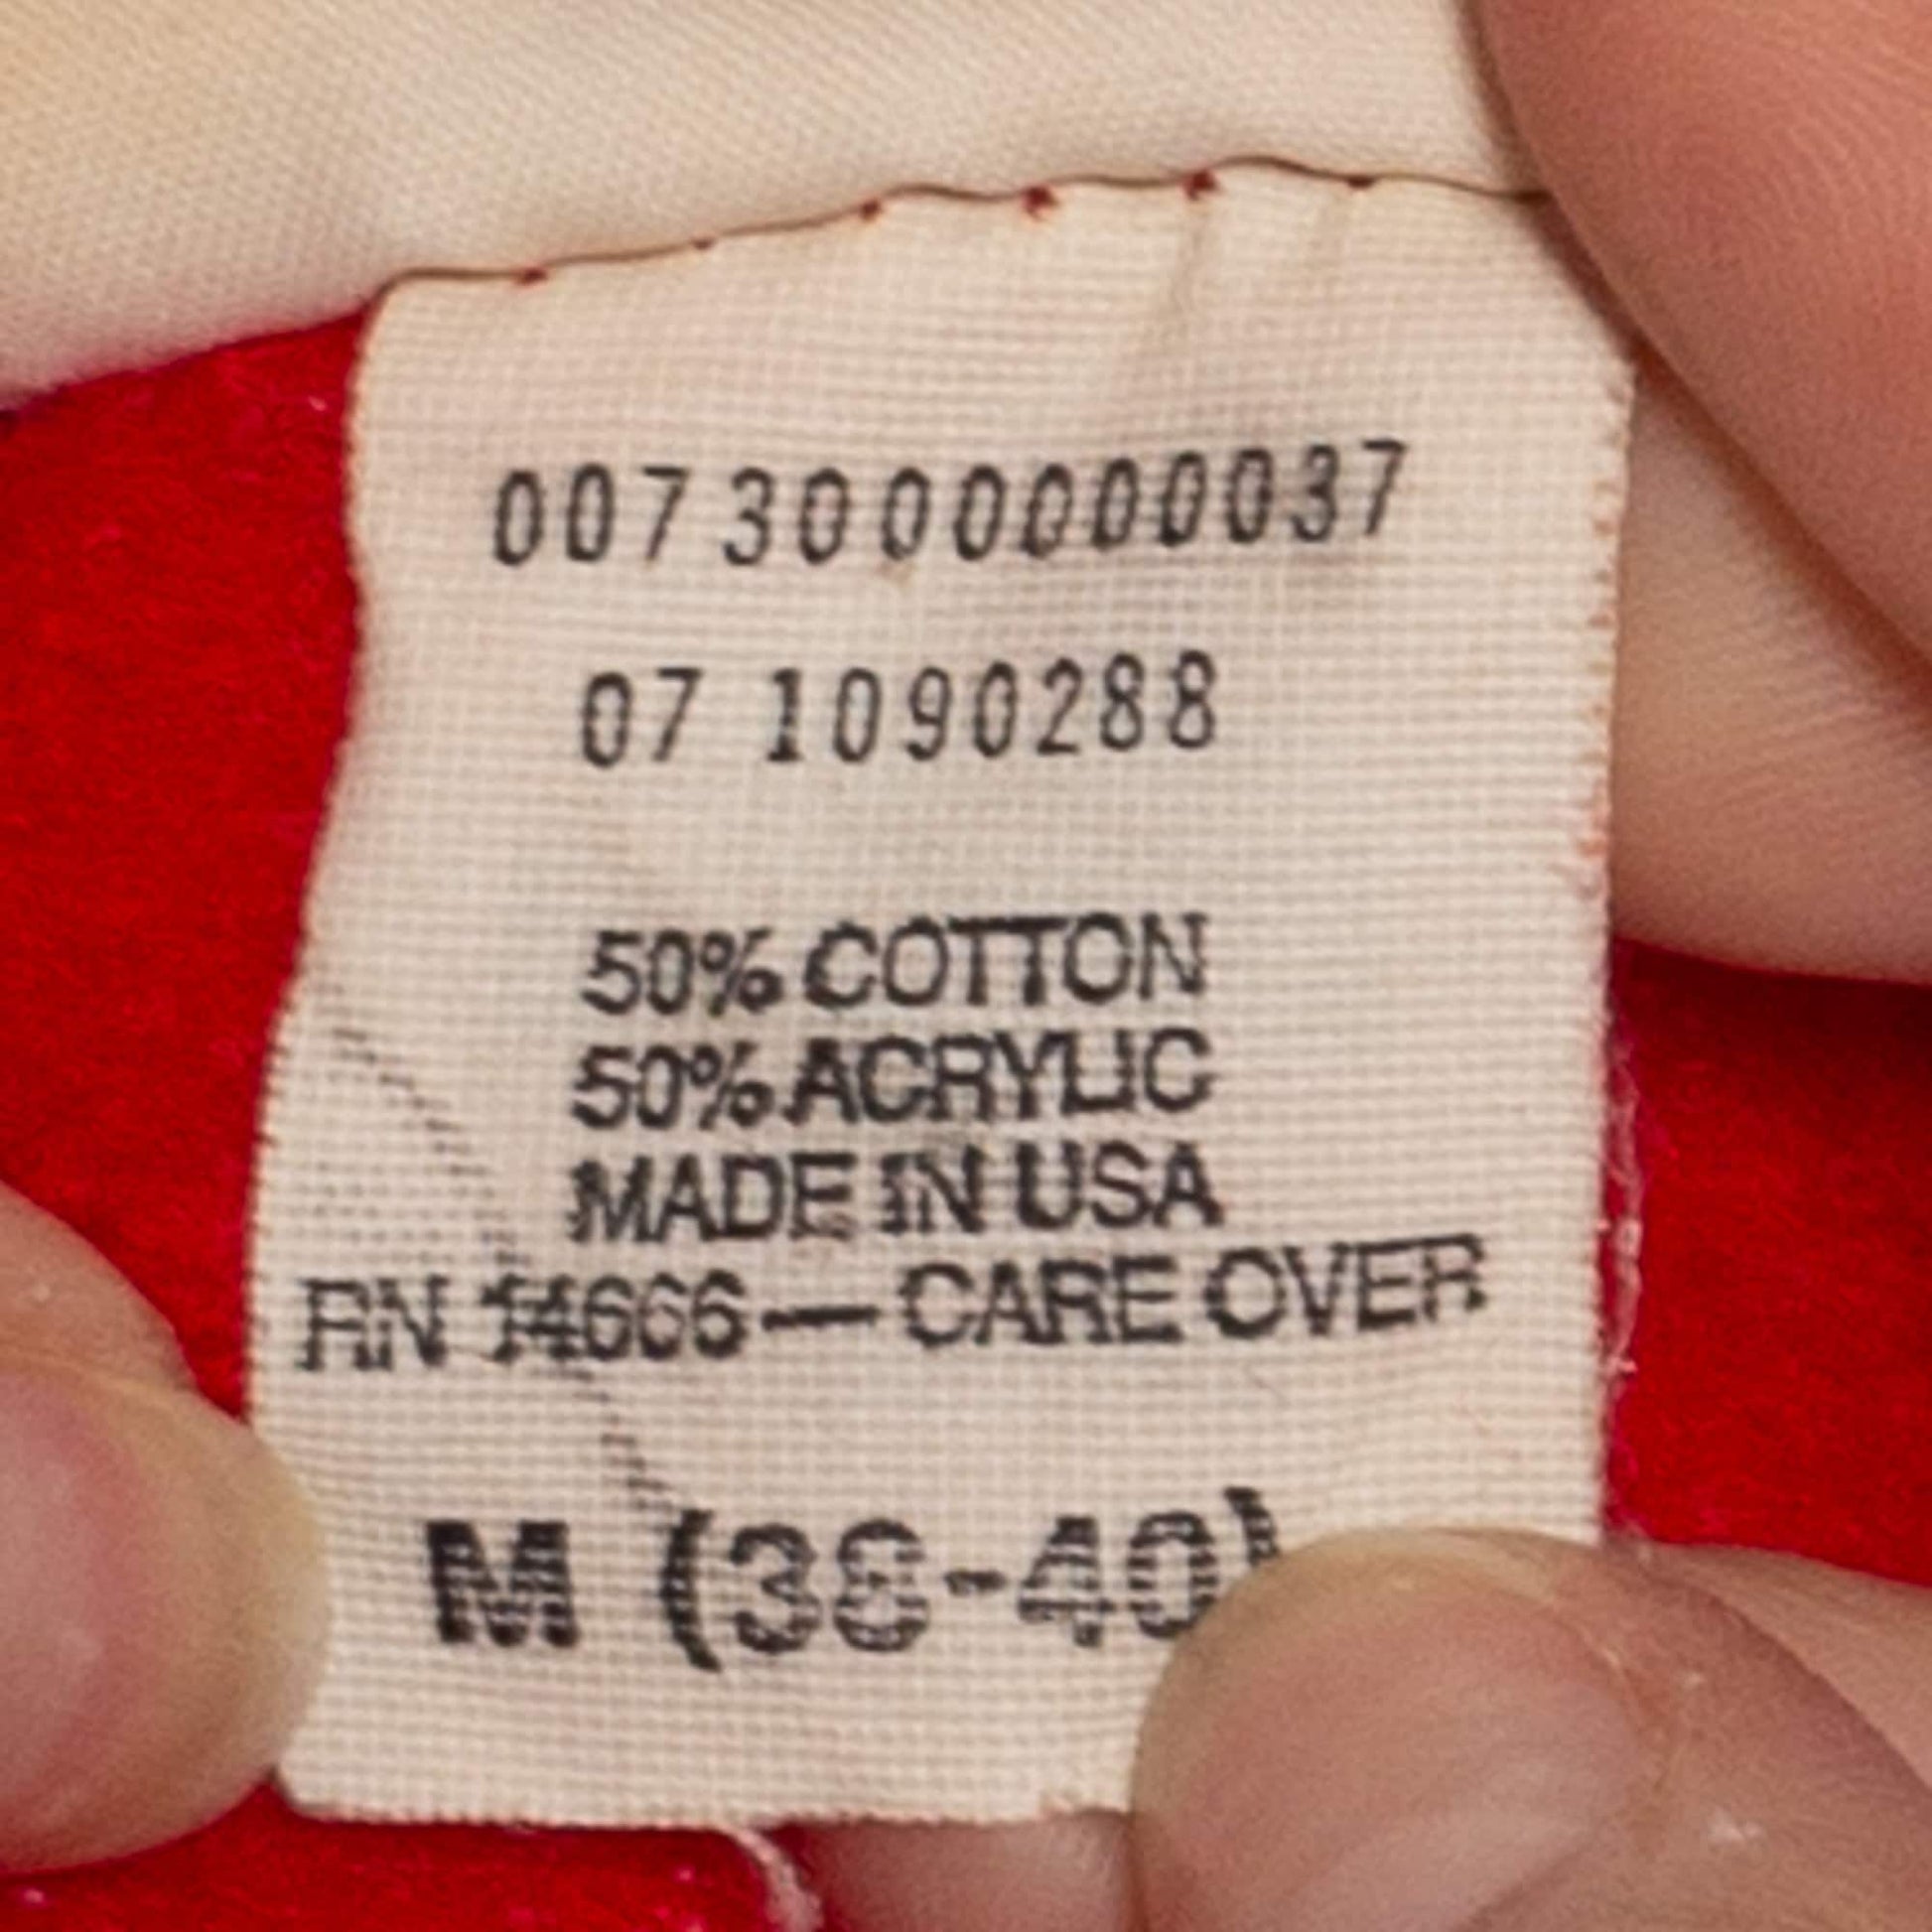 Medium 80s Red Raglan Sweatshirt | Vintage Slouchy Plain Crewneck Pullover